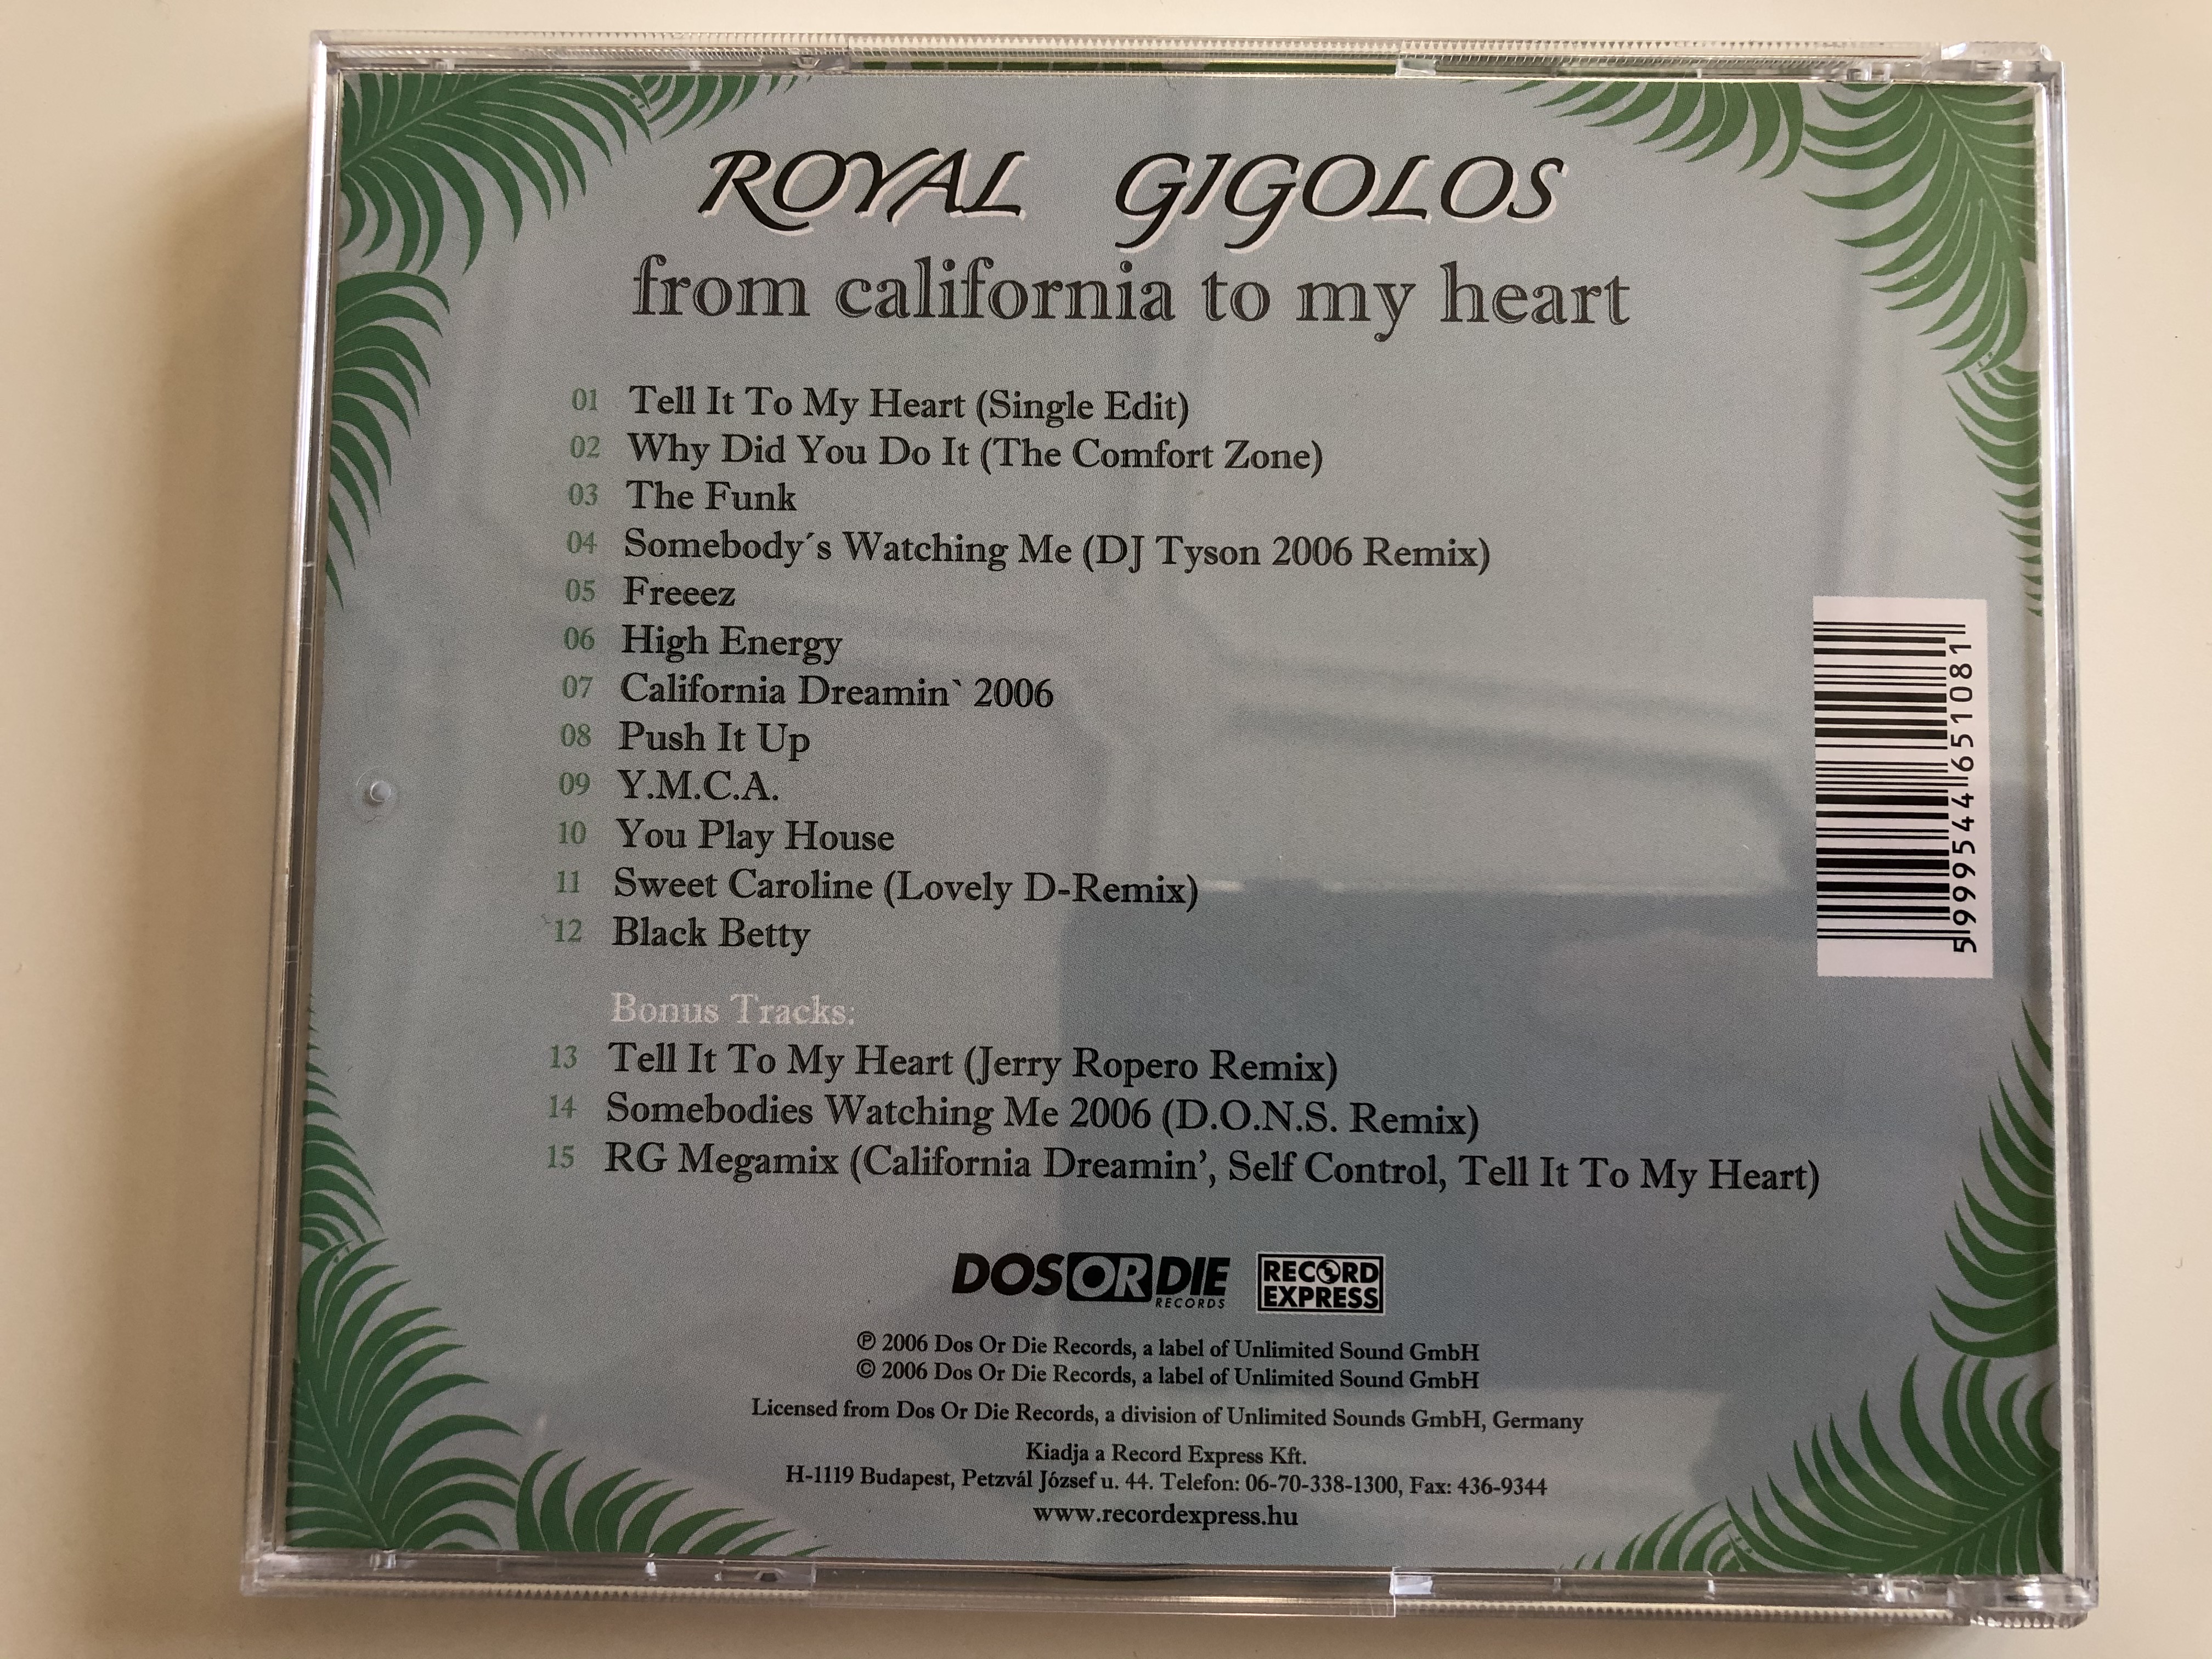 from-california-to-my-heart-royal-gigolos-record-express-audio-cd-2006-rec-255299-2-5-.jpg